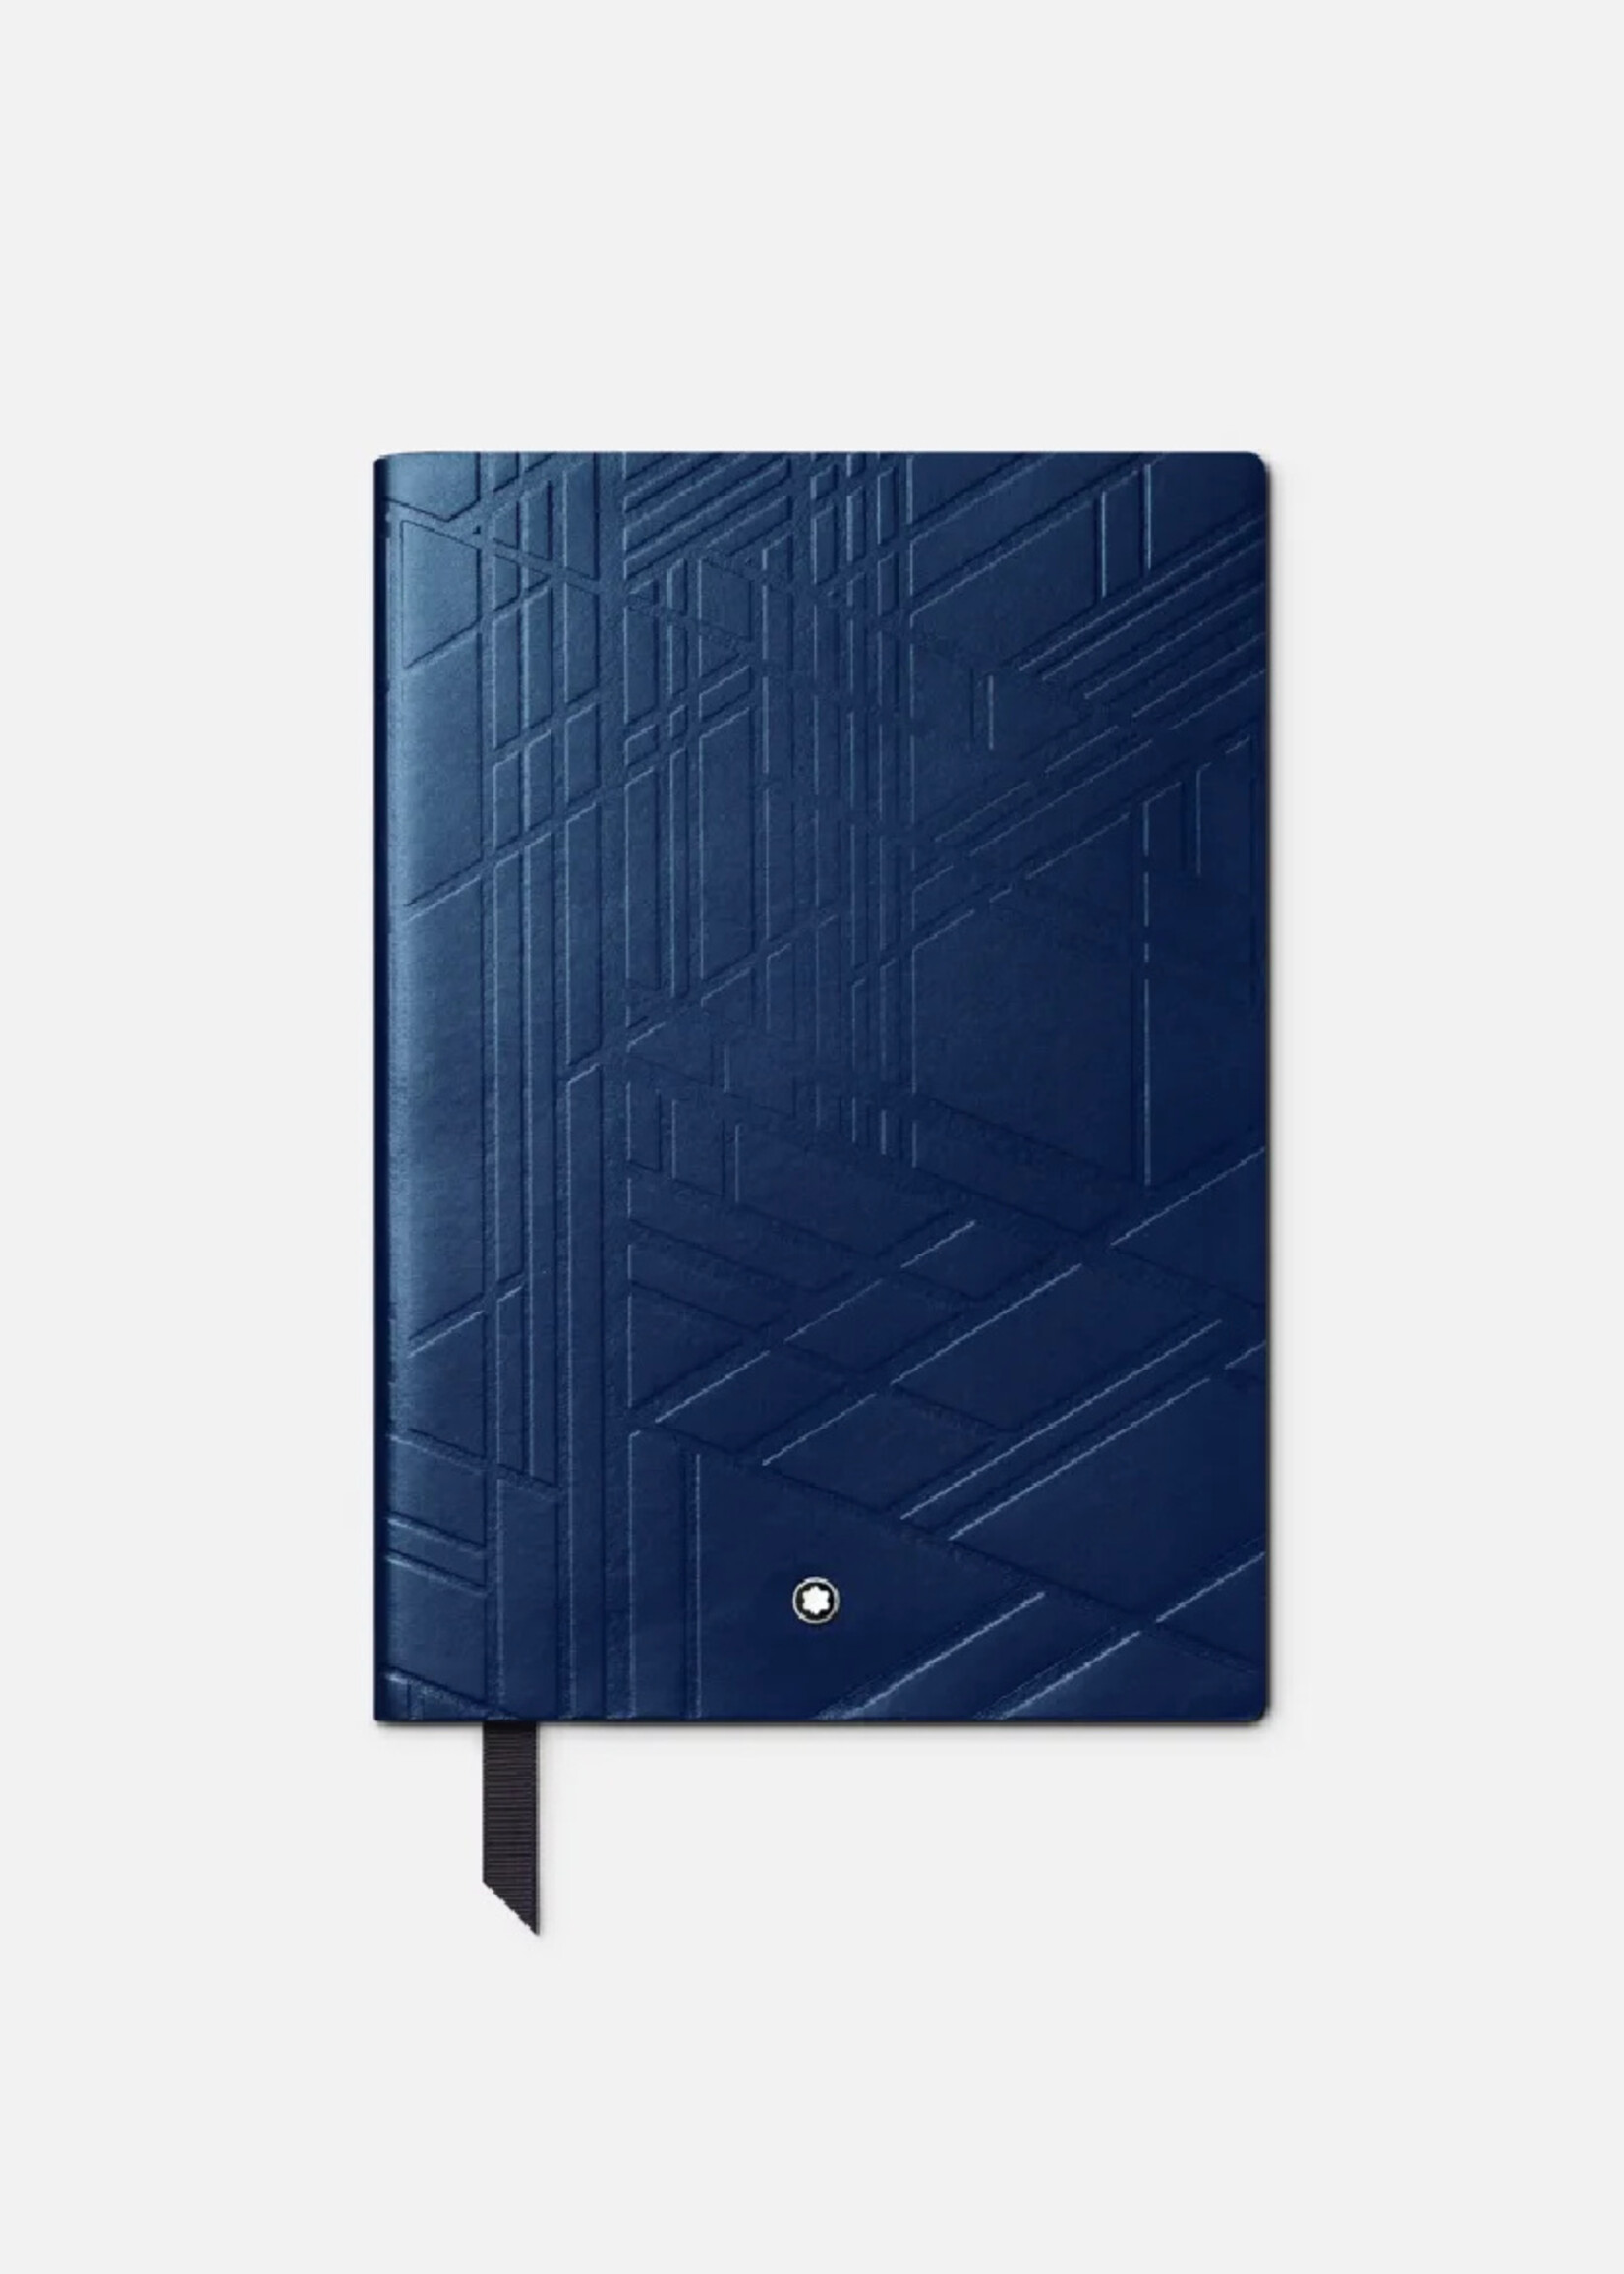 MONTBLANC Notebook #146 Starwalker SpaceBlue, blue lined